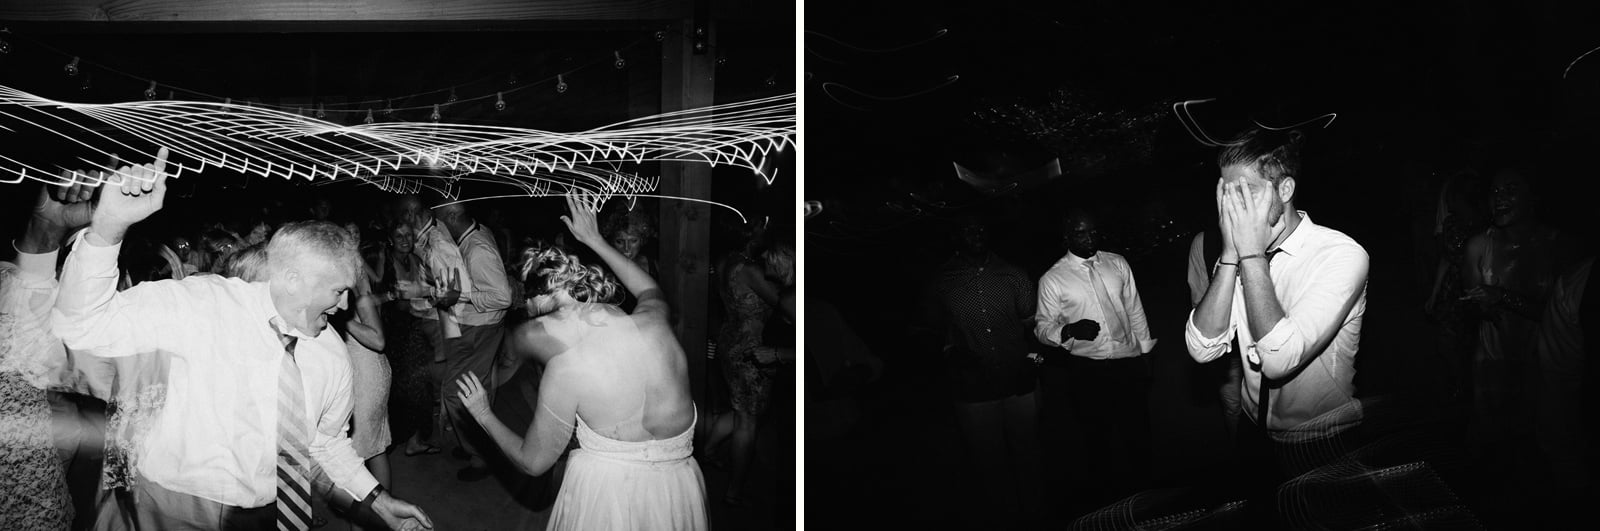 056-wedding-reception-dancing-light-streak-photos-black-and-white.jpg